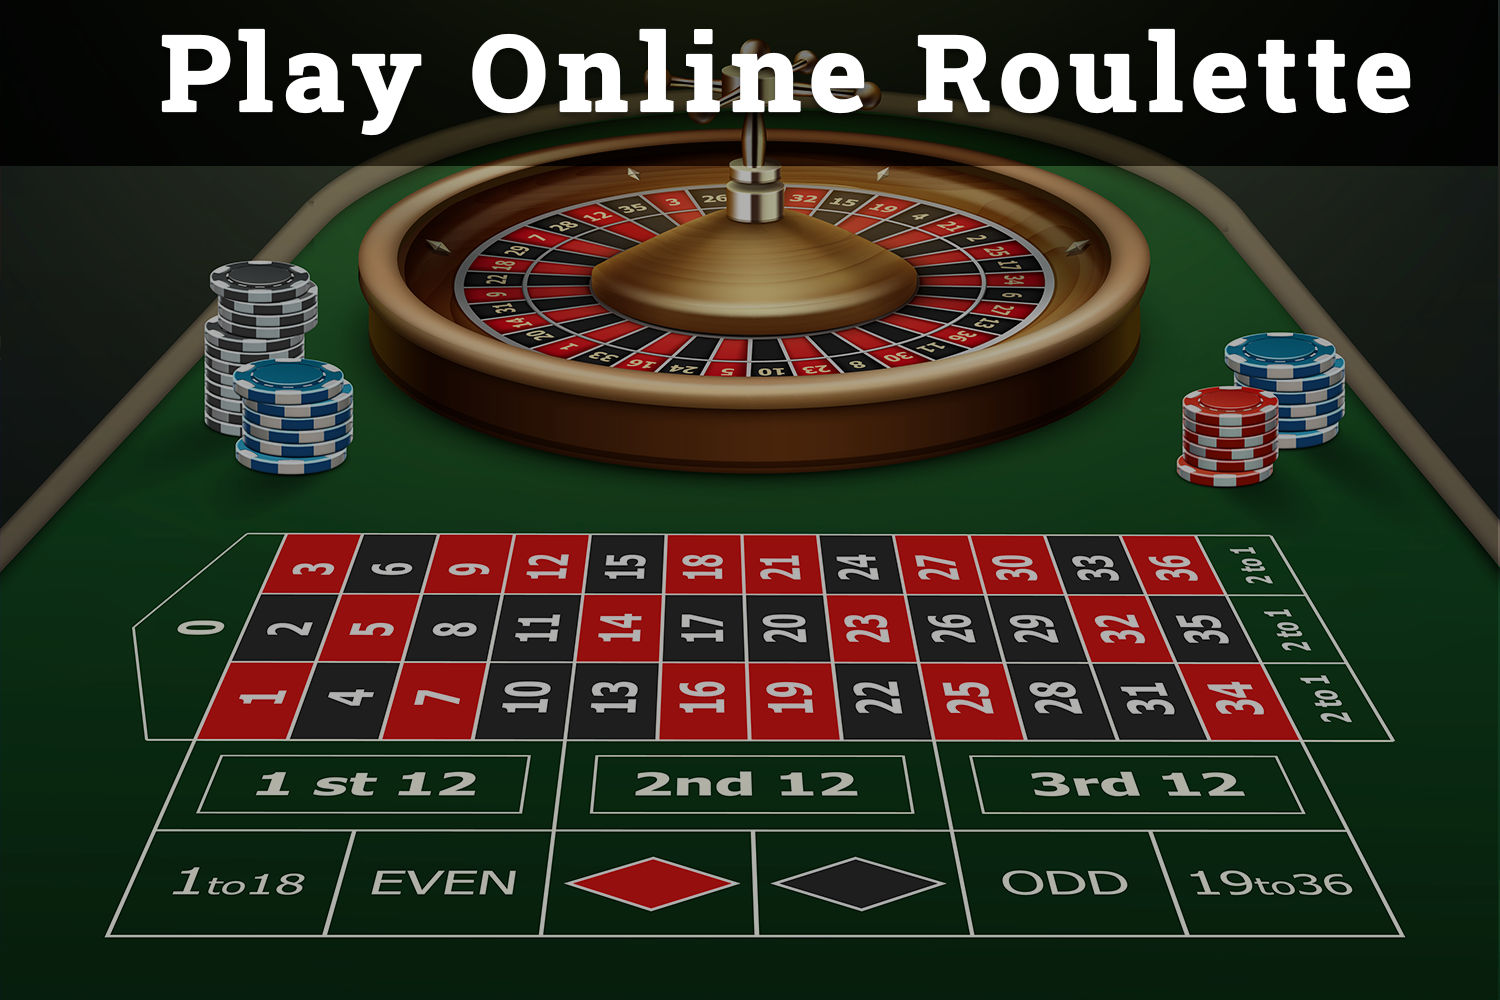 Play online roulette tojgsayla